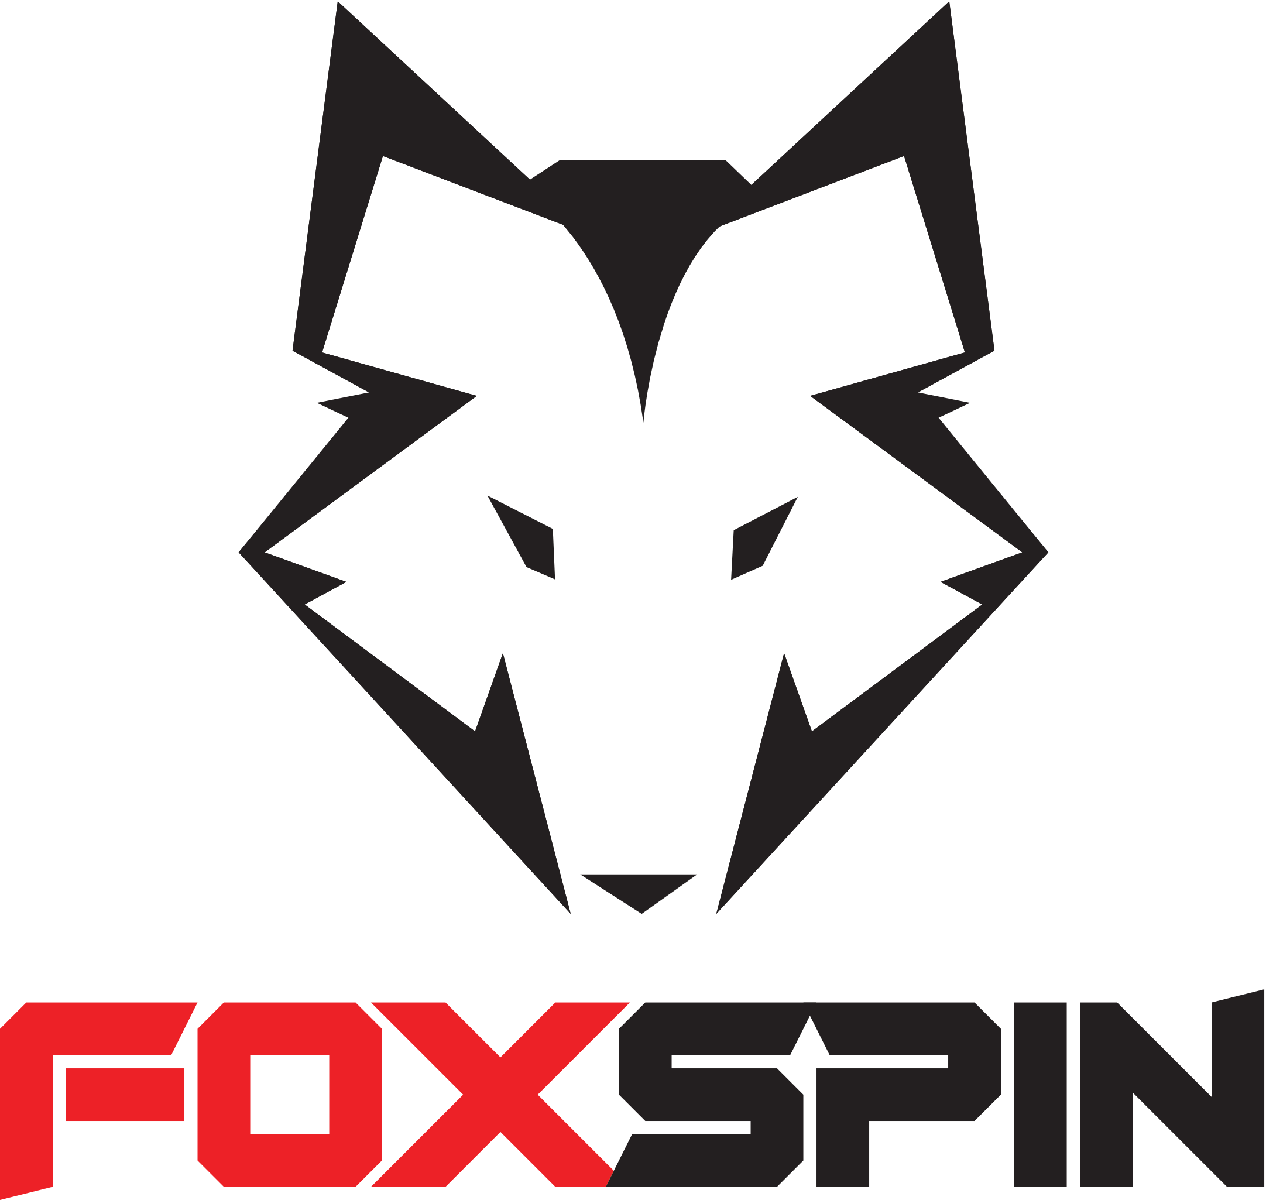 (c) Foxspin.com